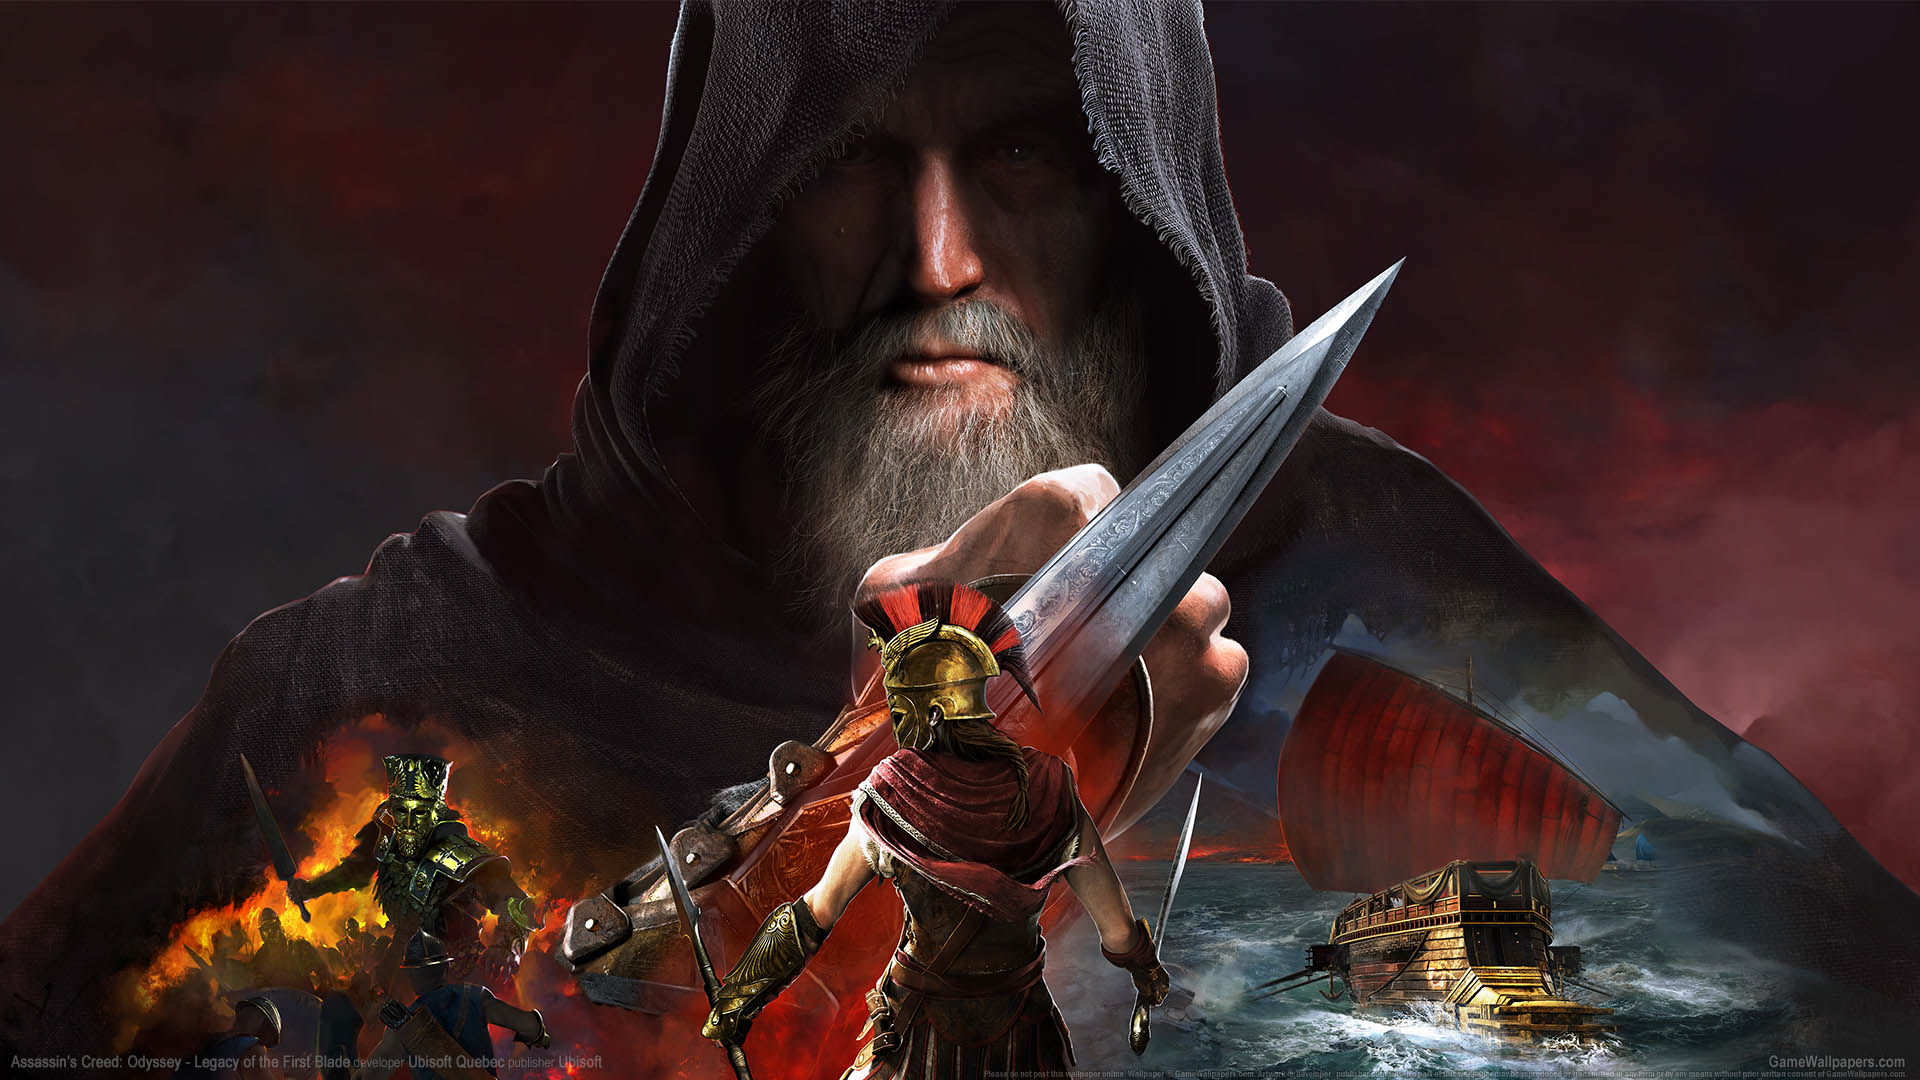 Assassin's Creed: Odyssey - Legacy of the First Blade fondo de escritorio 01 1920x1080